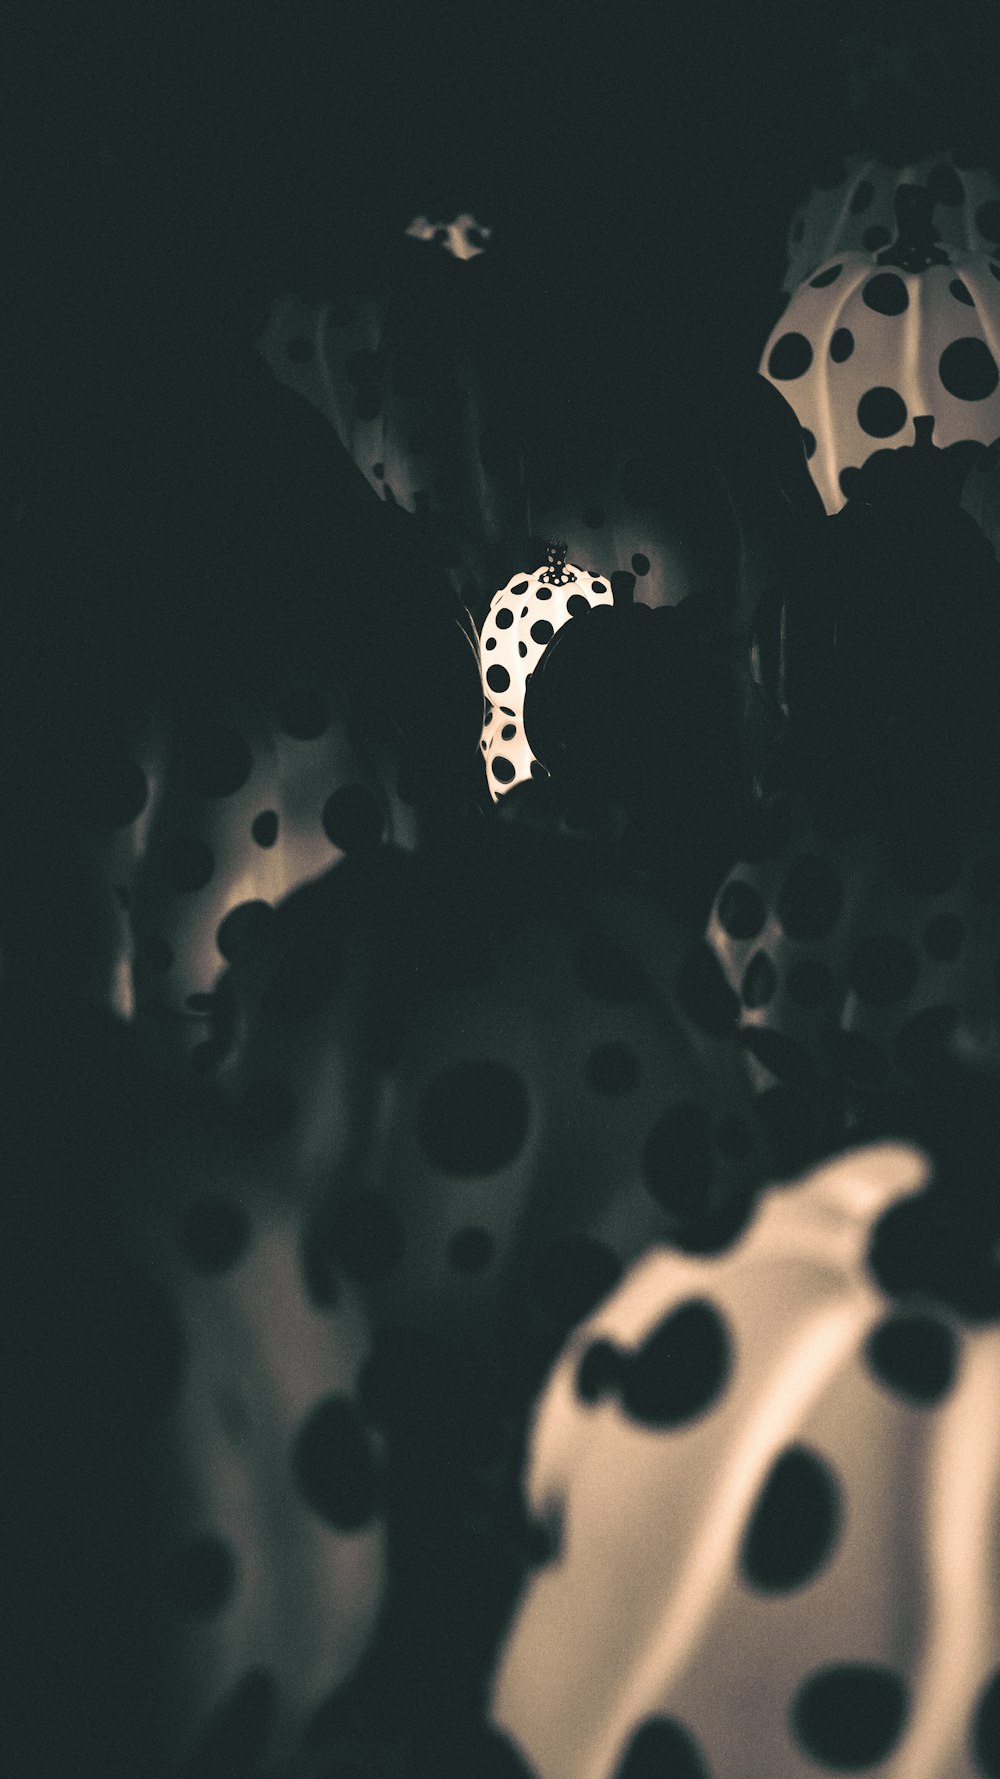 a black and white photo of polka dot umbrellas